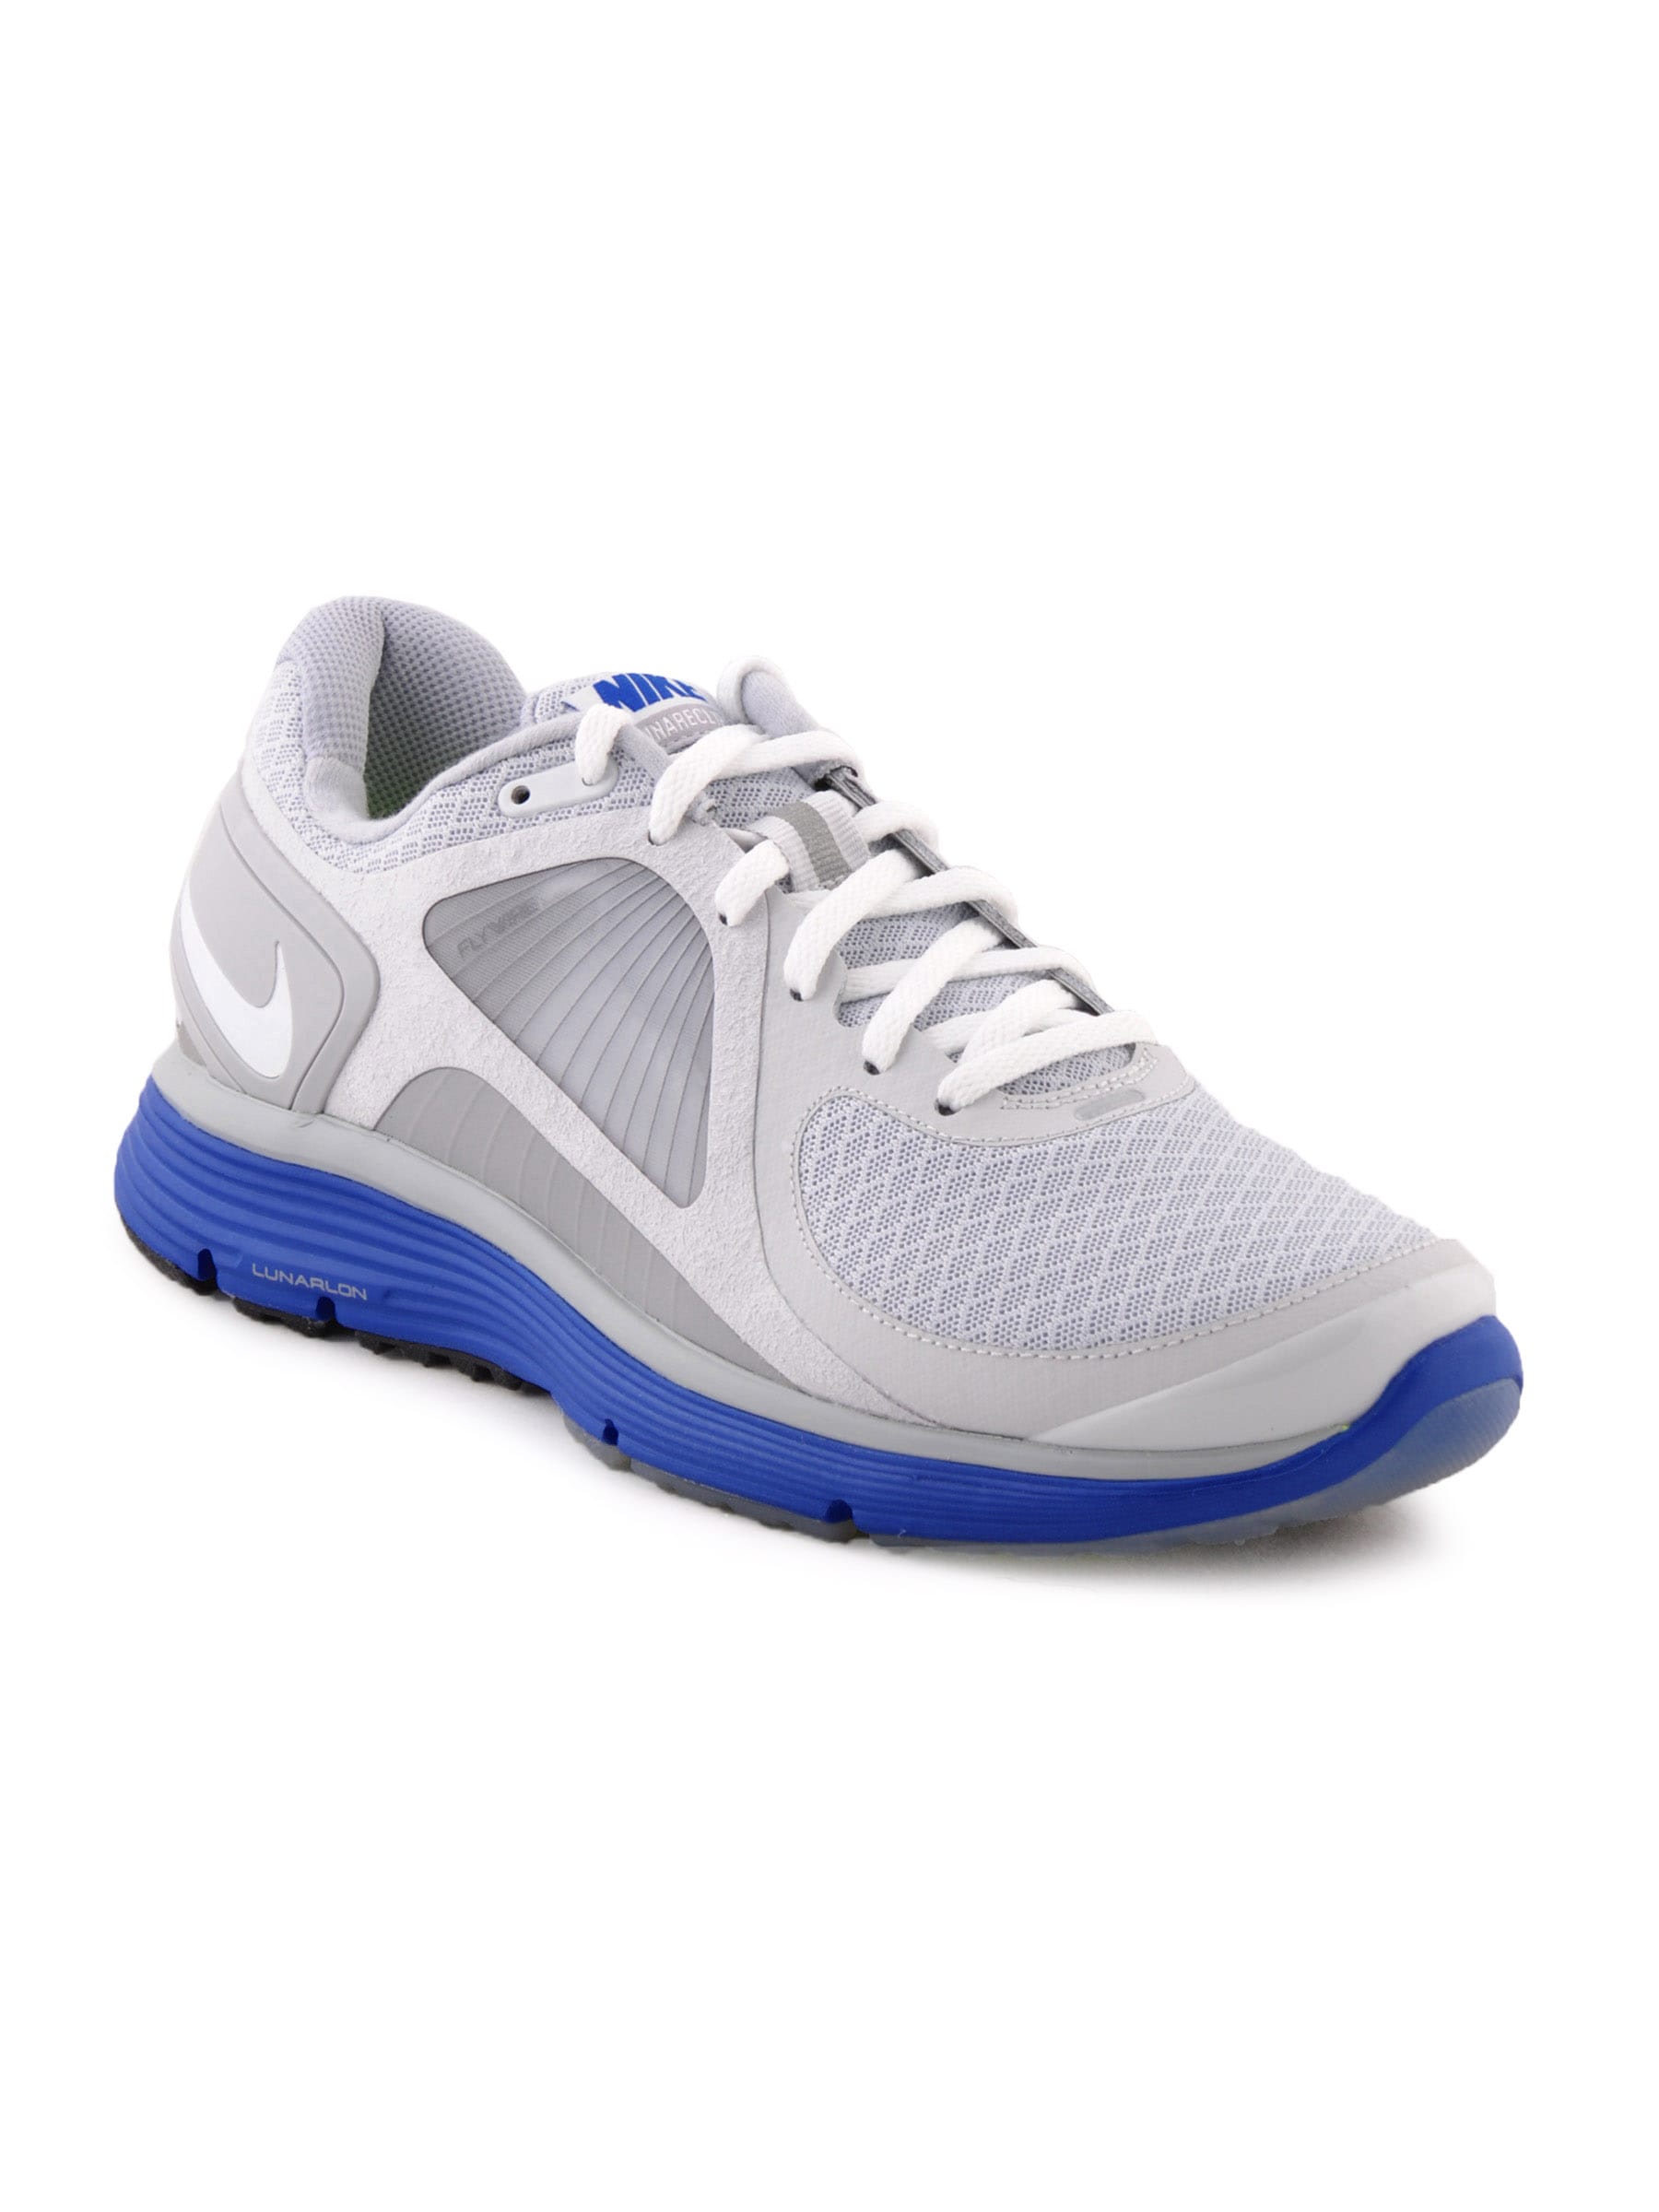 Nike Men Lunareclipse White Sports Shoes